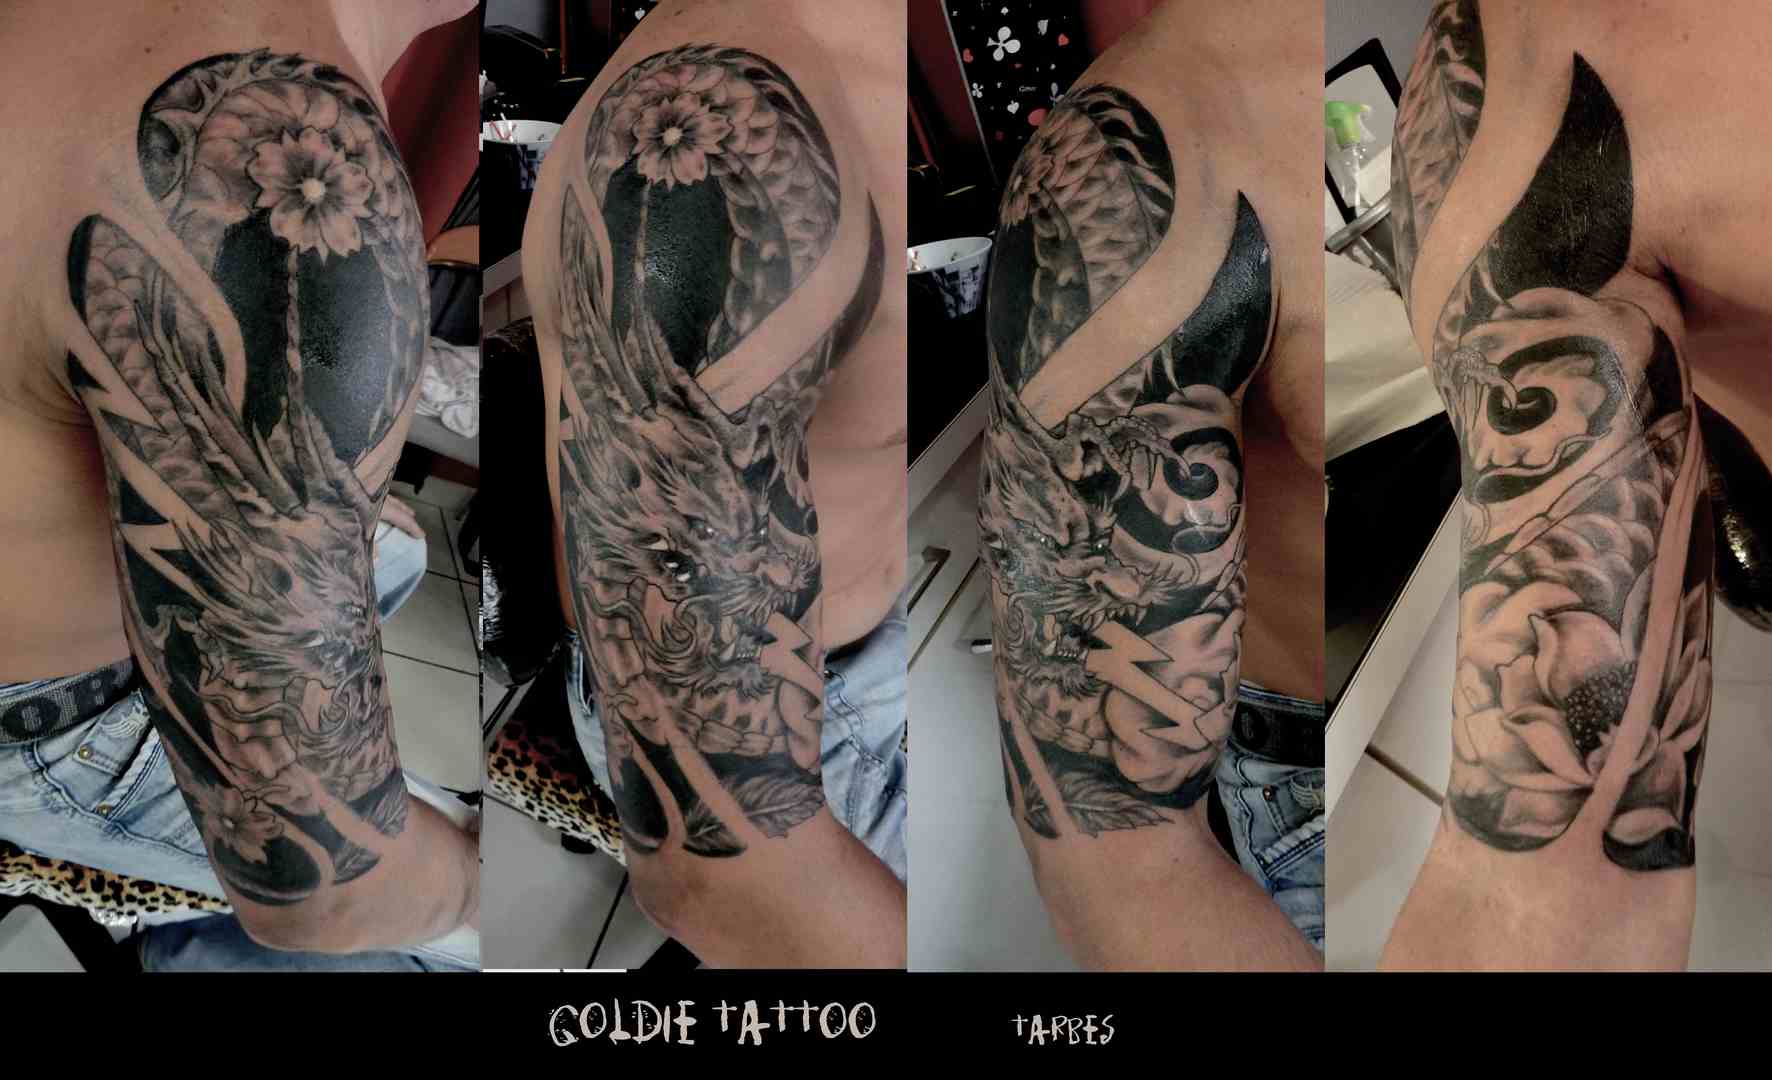 goldie-tattoo-tarbes-28-10-2013-bras-dragon-japonais-hdtv-1080site.jpg